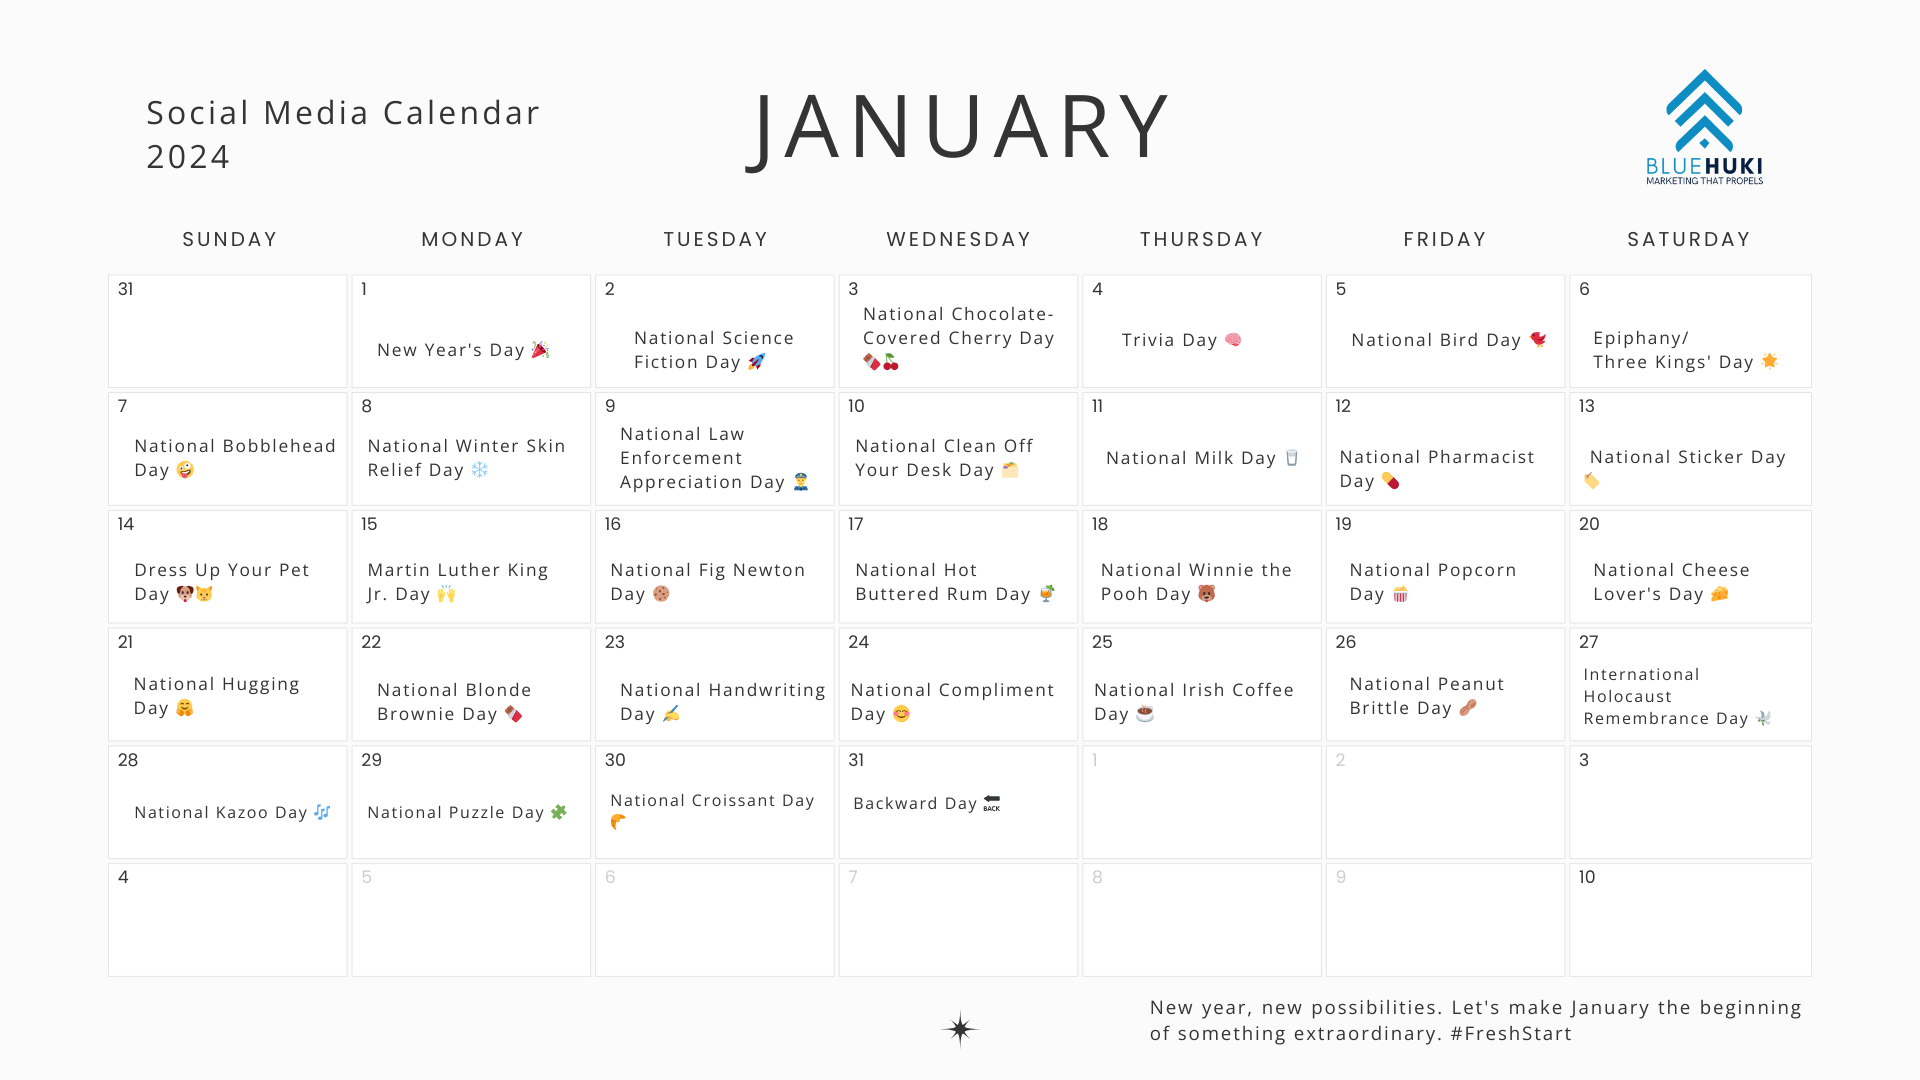 Kickstart Your Year Social Media Marketing Calendar for January 2024